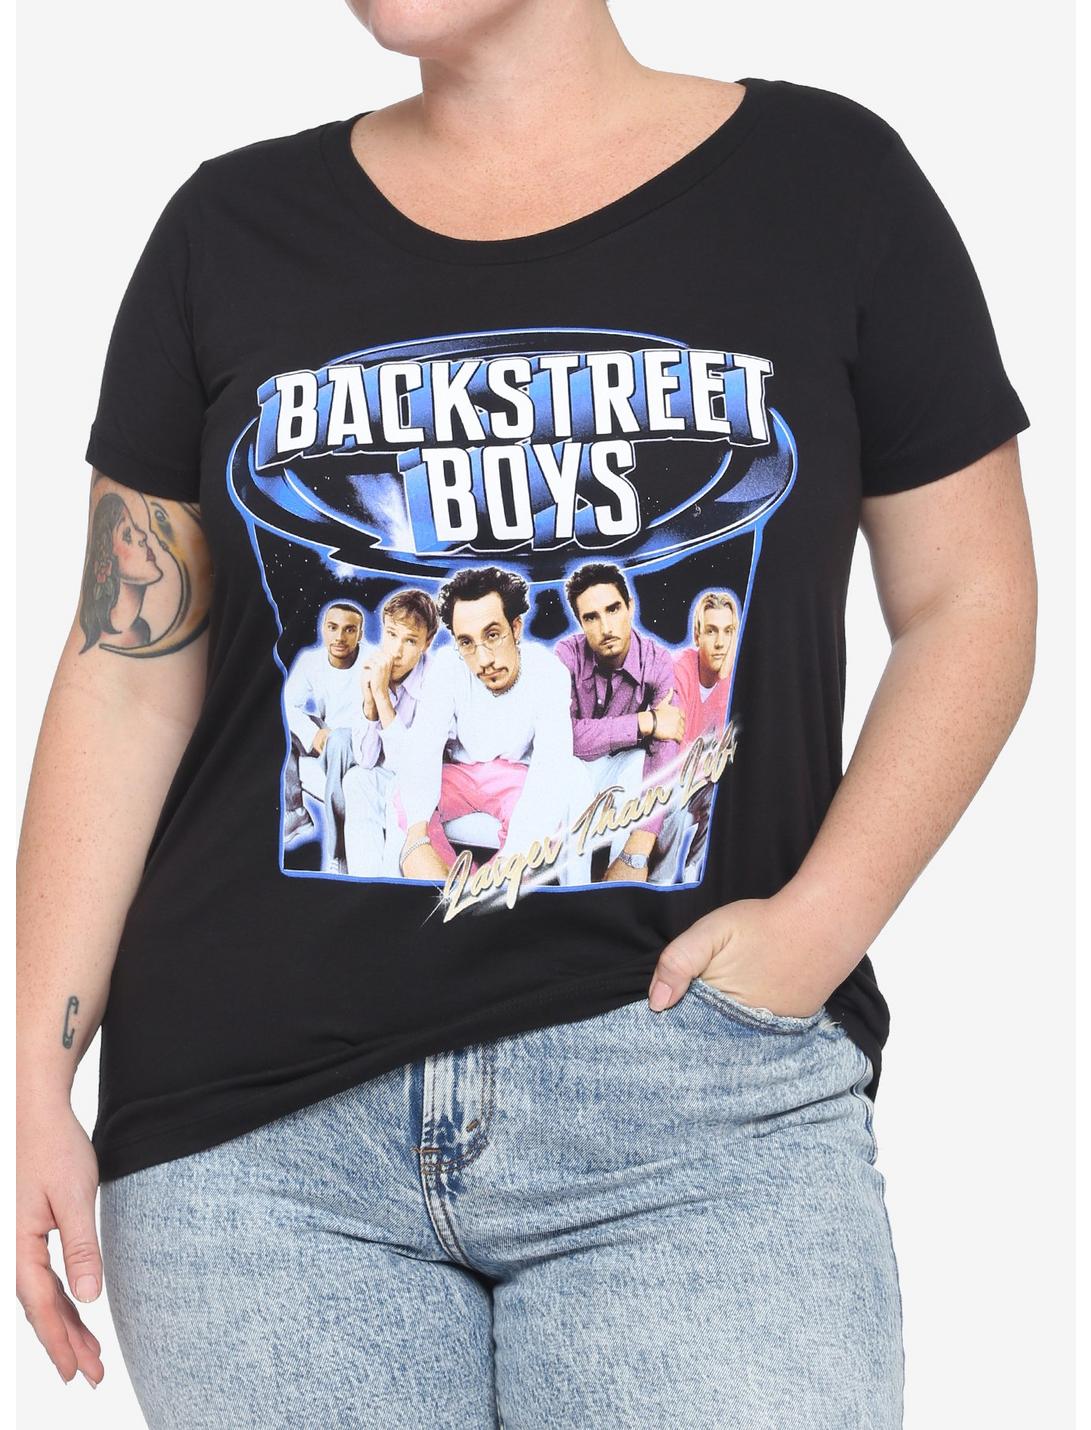 Backstreet Boys Larger Than Life Photo Girls T-Shirt Plus Size, BLACK, hi-res